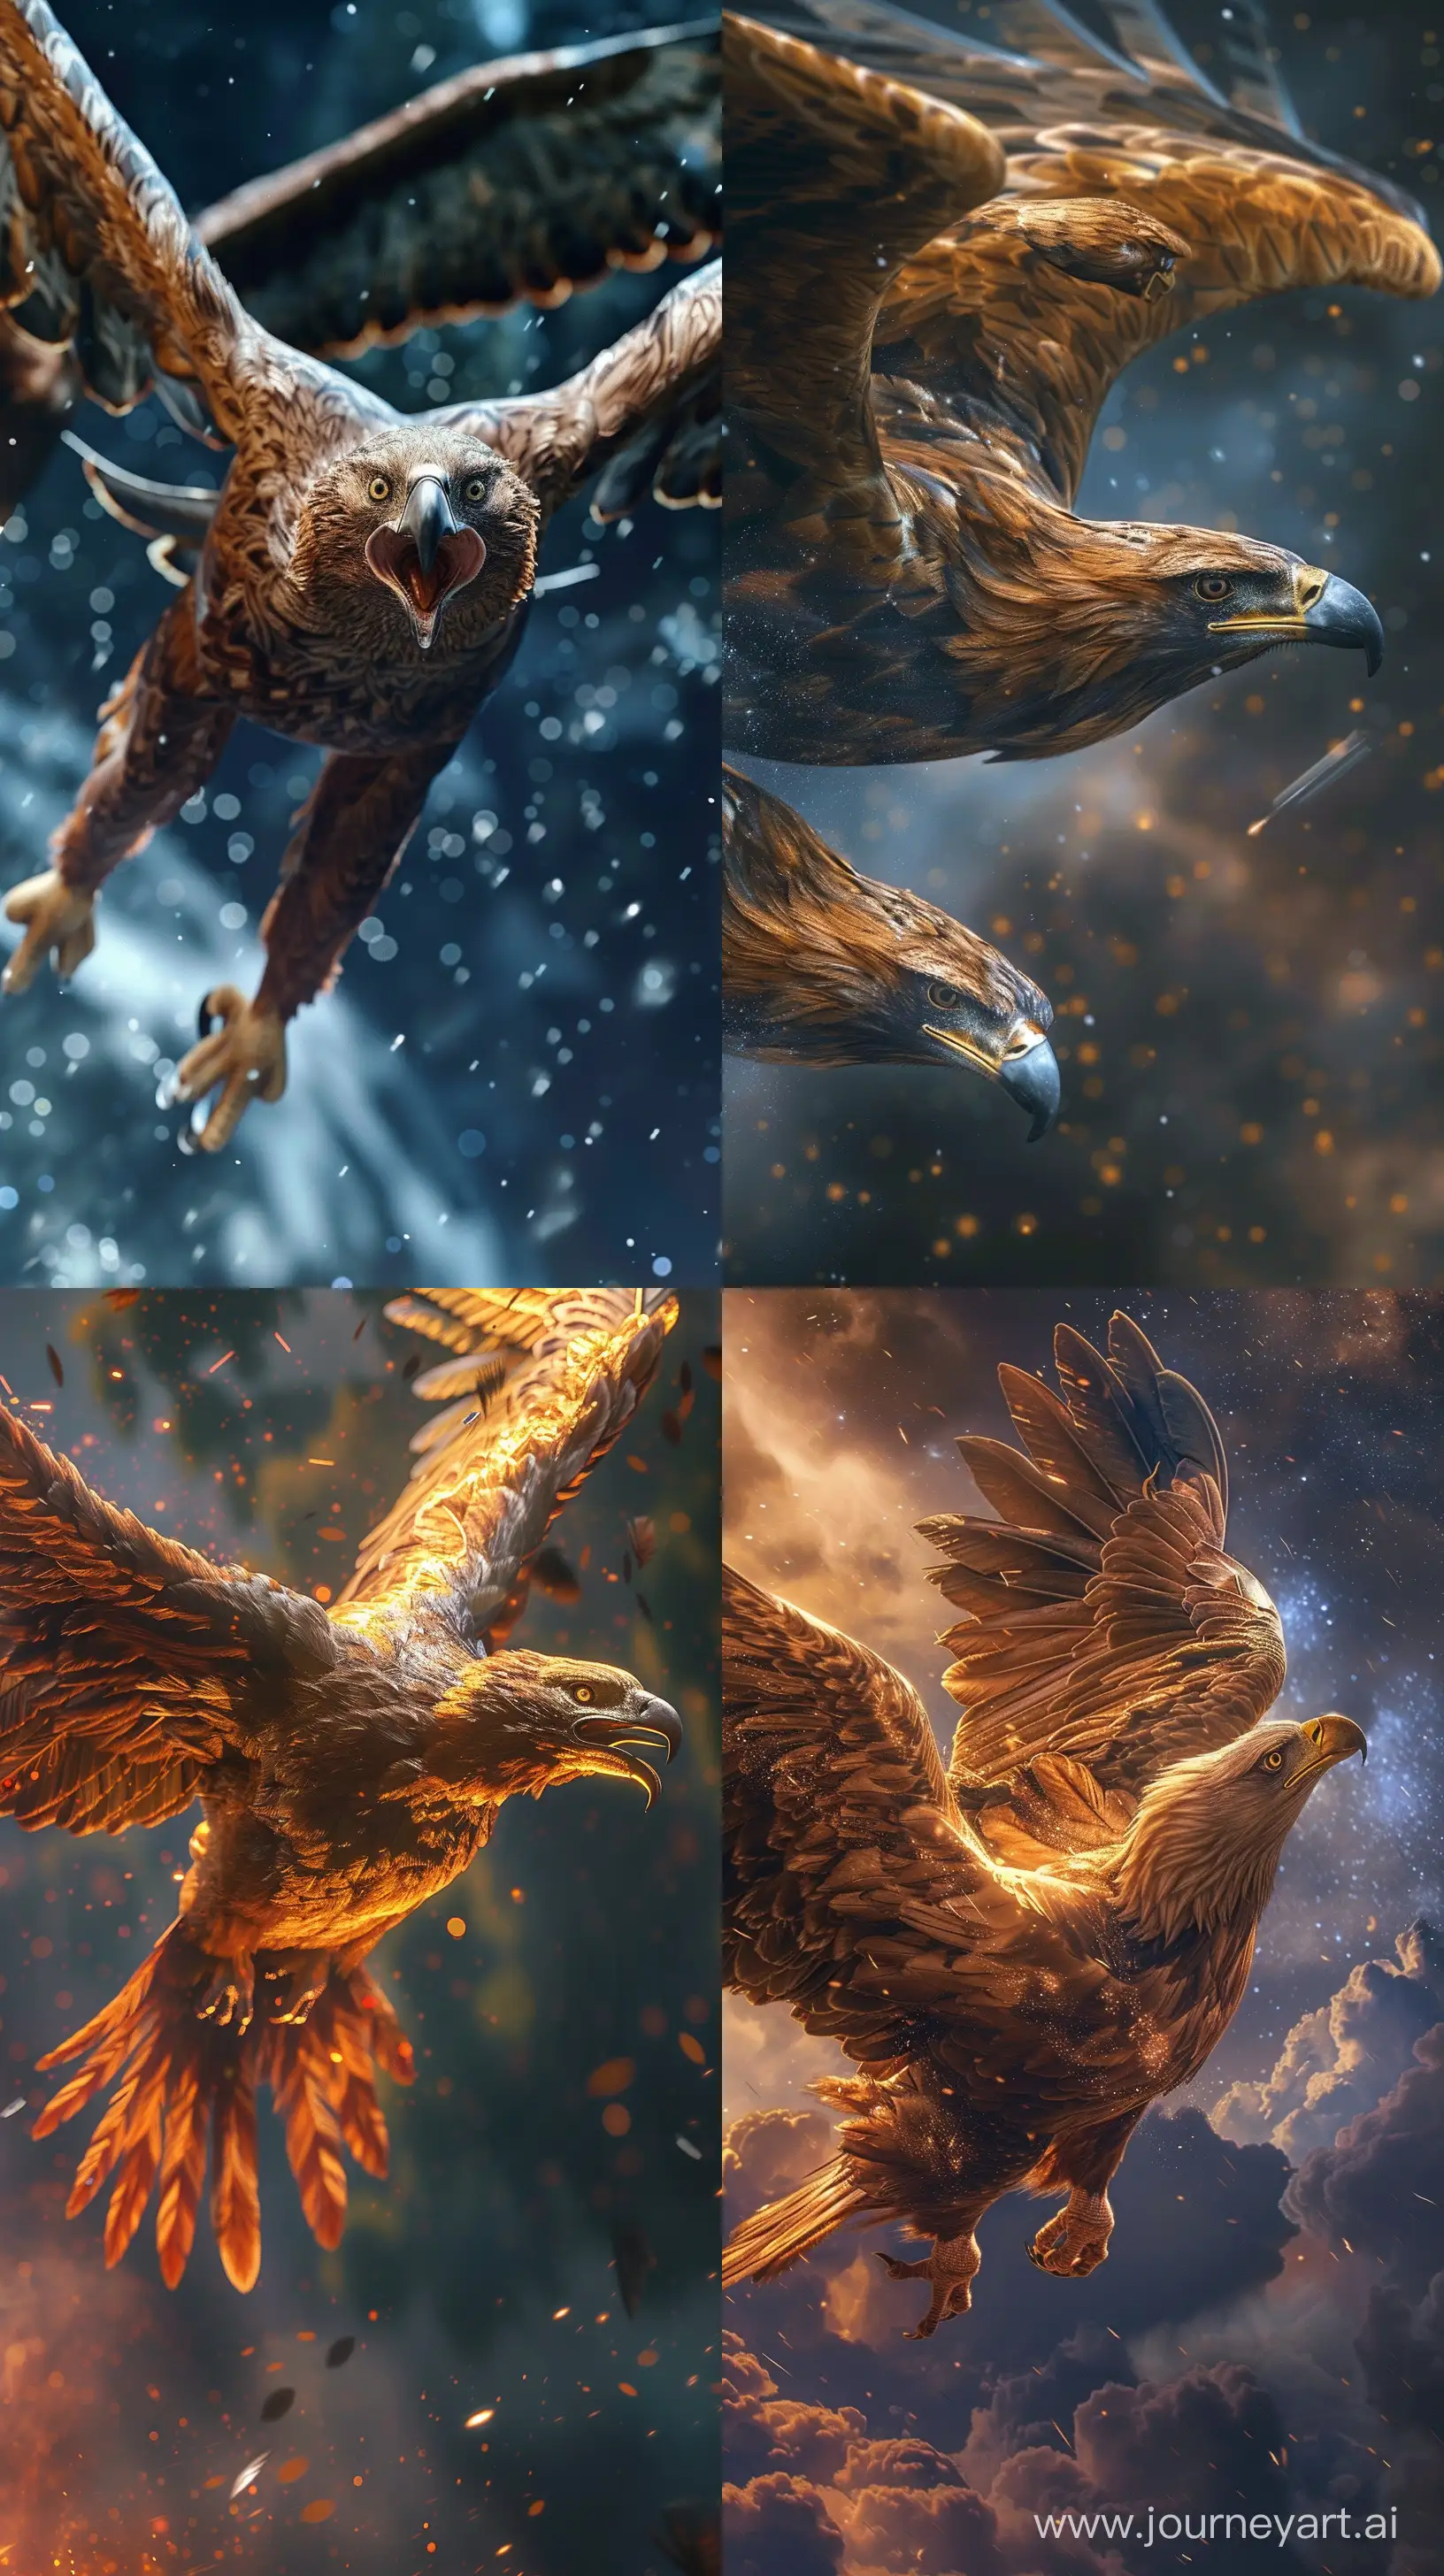 TwoHeaded-Eagle-Soaring-in-Ancient-Hindu-Mythological-Glory